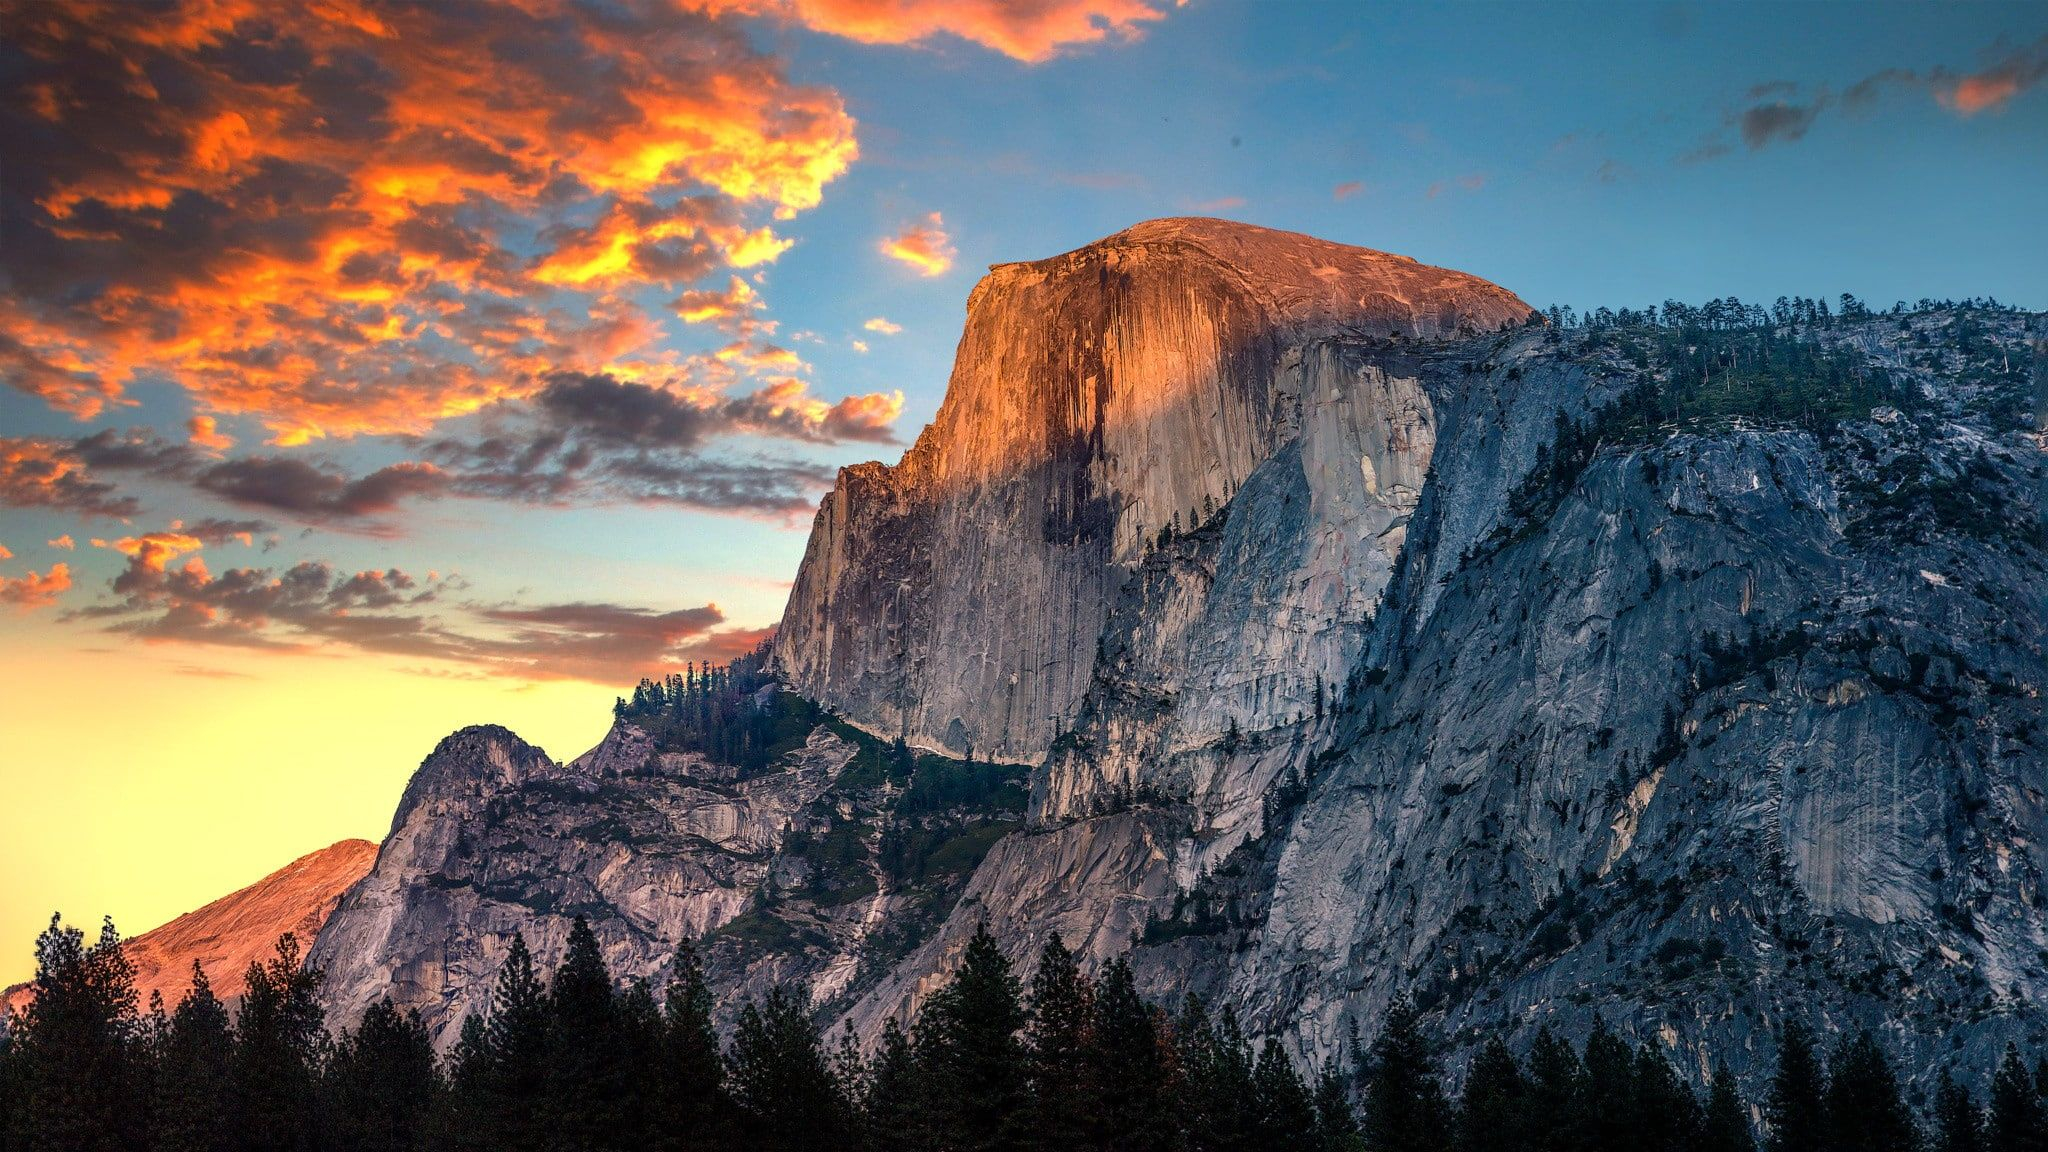 2048x1152 nature #mountains #cliff #rock #sunset Yosemite National Park orange sky #California #1080P #wallpaper #hdwallpaper #desktop | National parks, Mountains, Yosemite